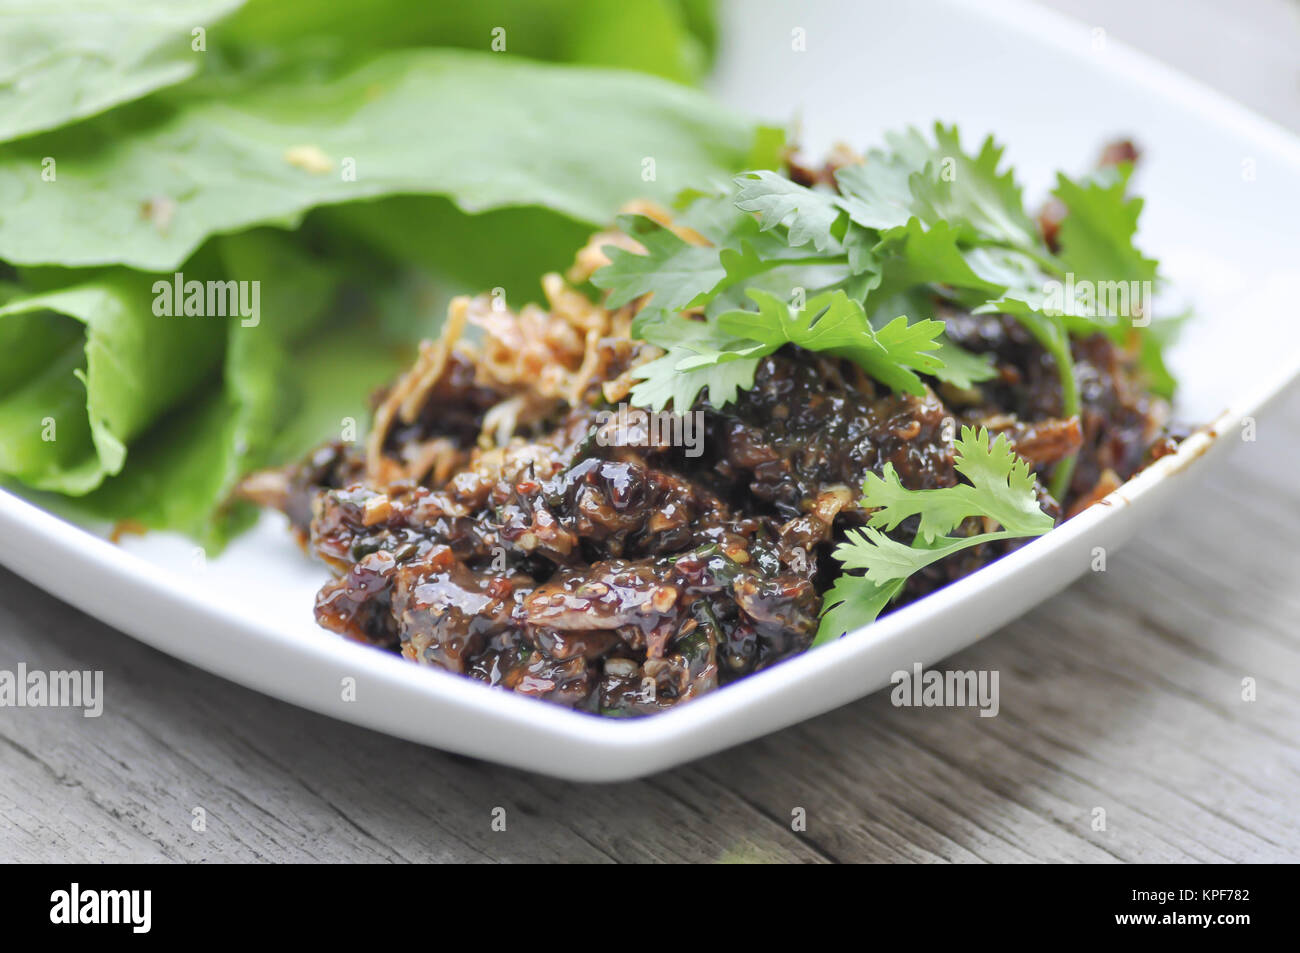 minced fish salad or Northern Thai food Stock Photo